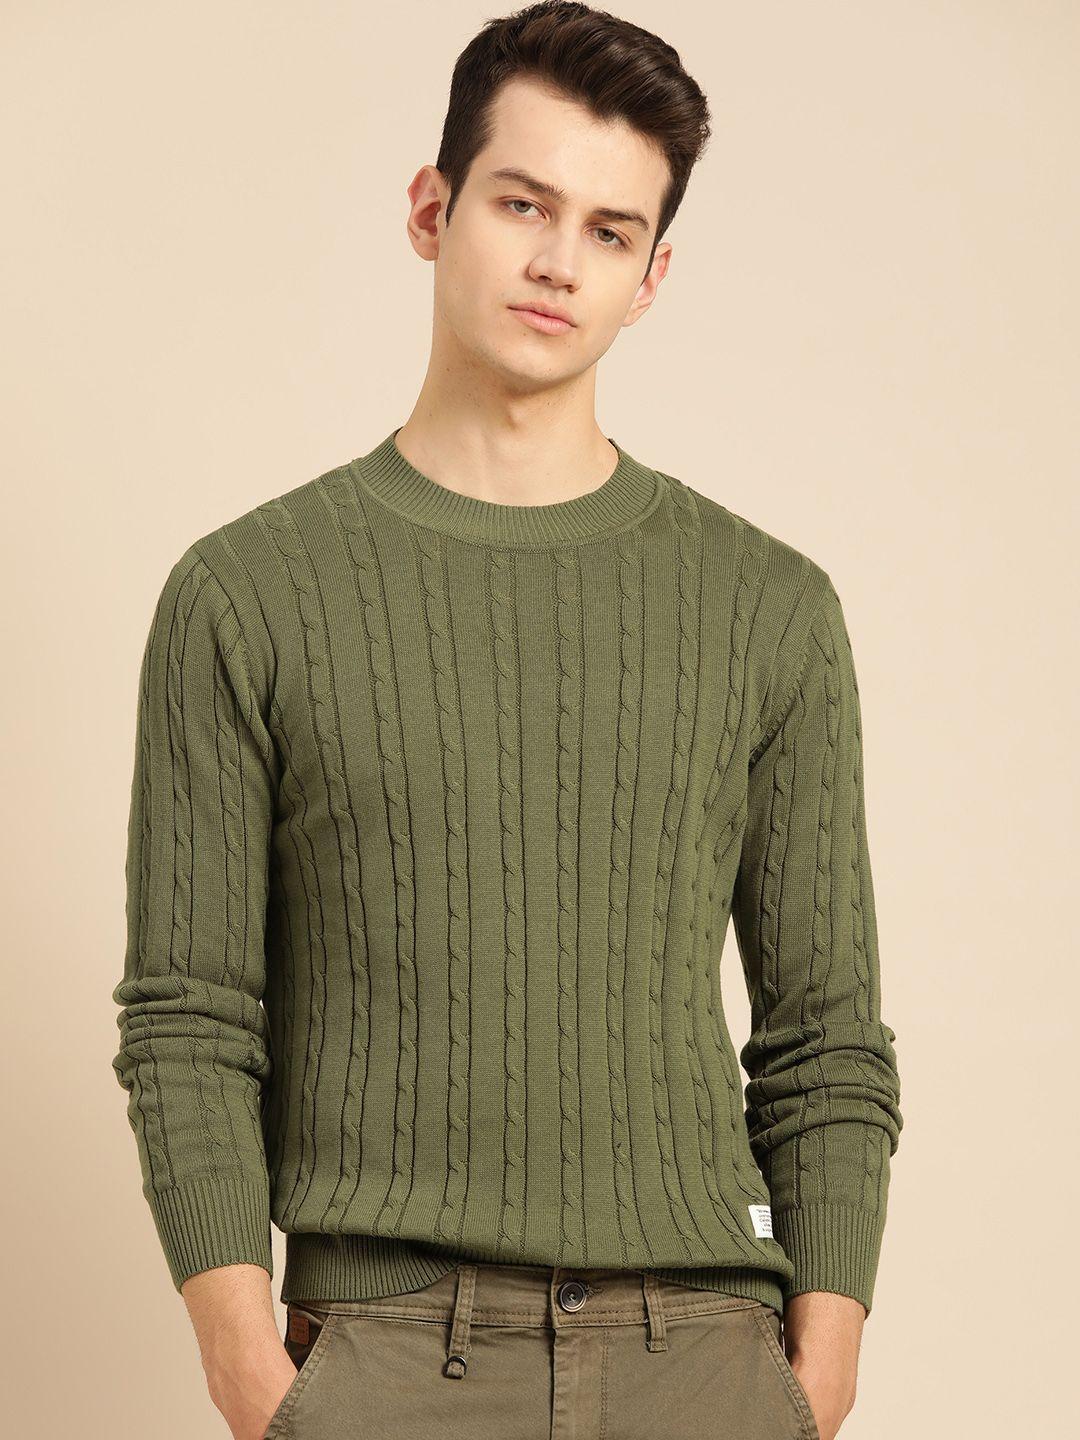 mr bowerbird men olive green self design pure cotton pullover sweater